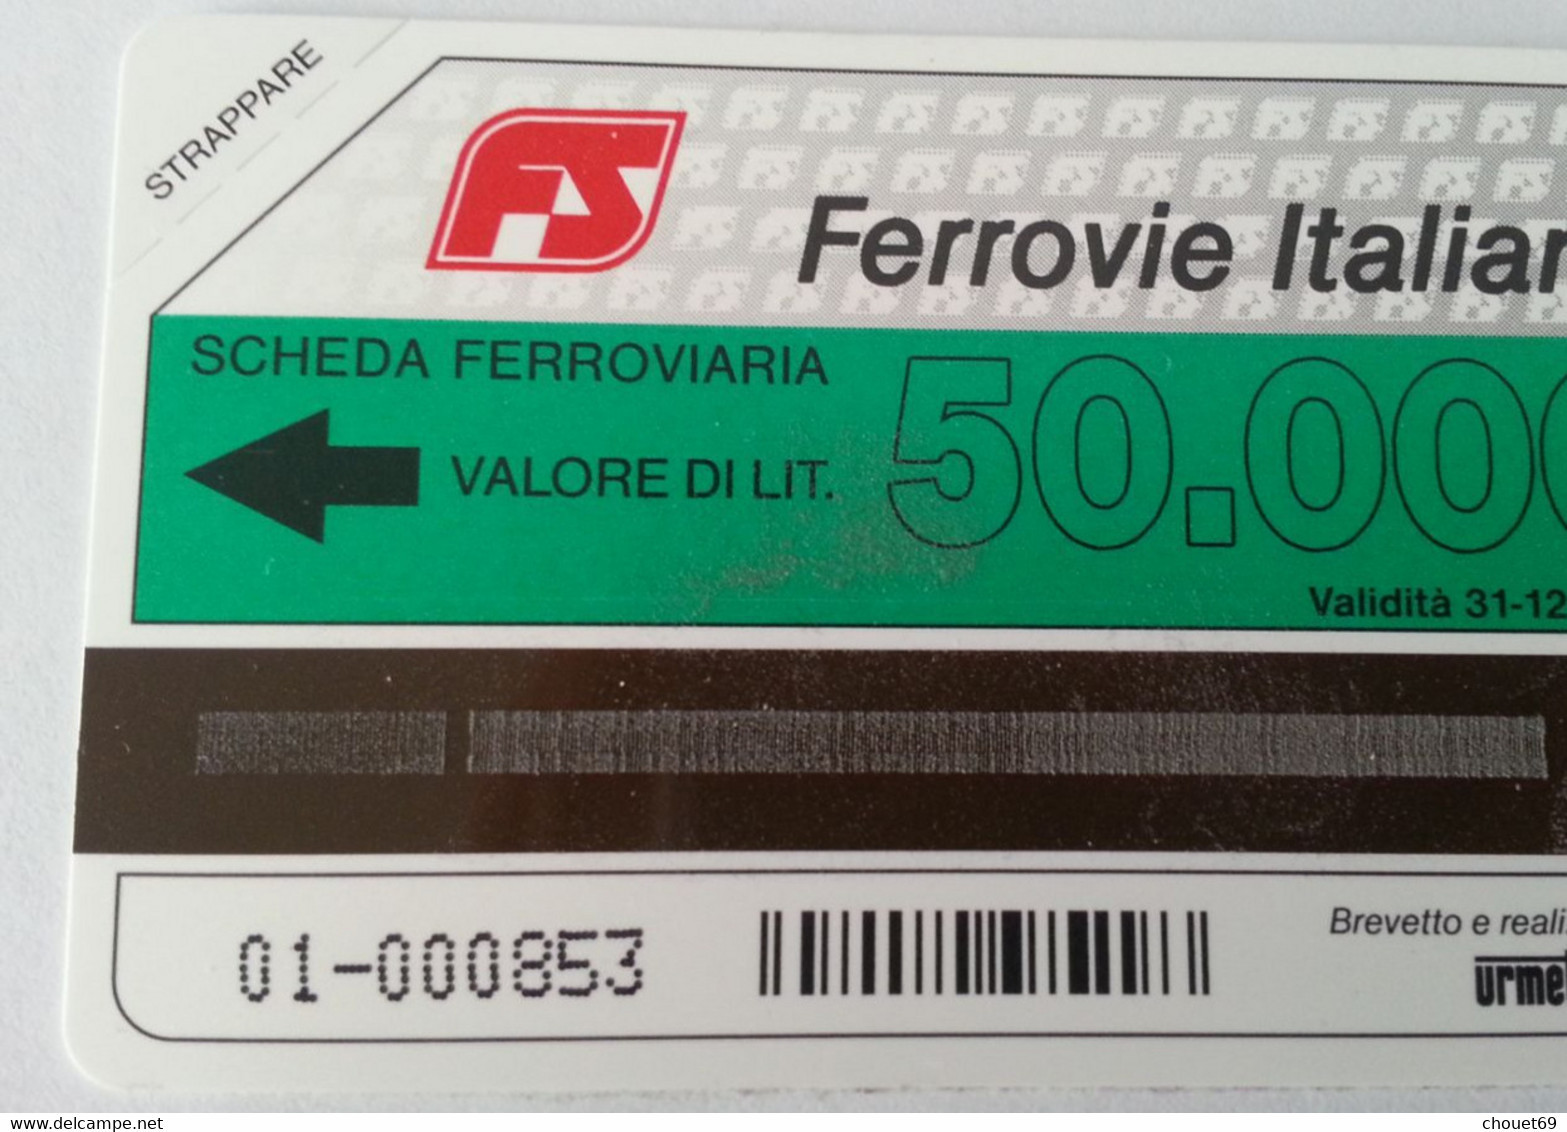 FS Ferrovie Italiane Scheda Ferroviaria In Train 50000 Urmet NEUVE MINT Ferrovie (D0415 - Special Uses